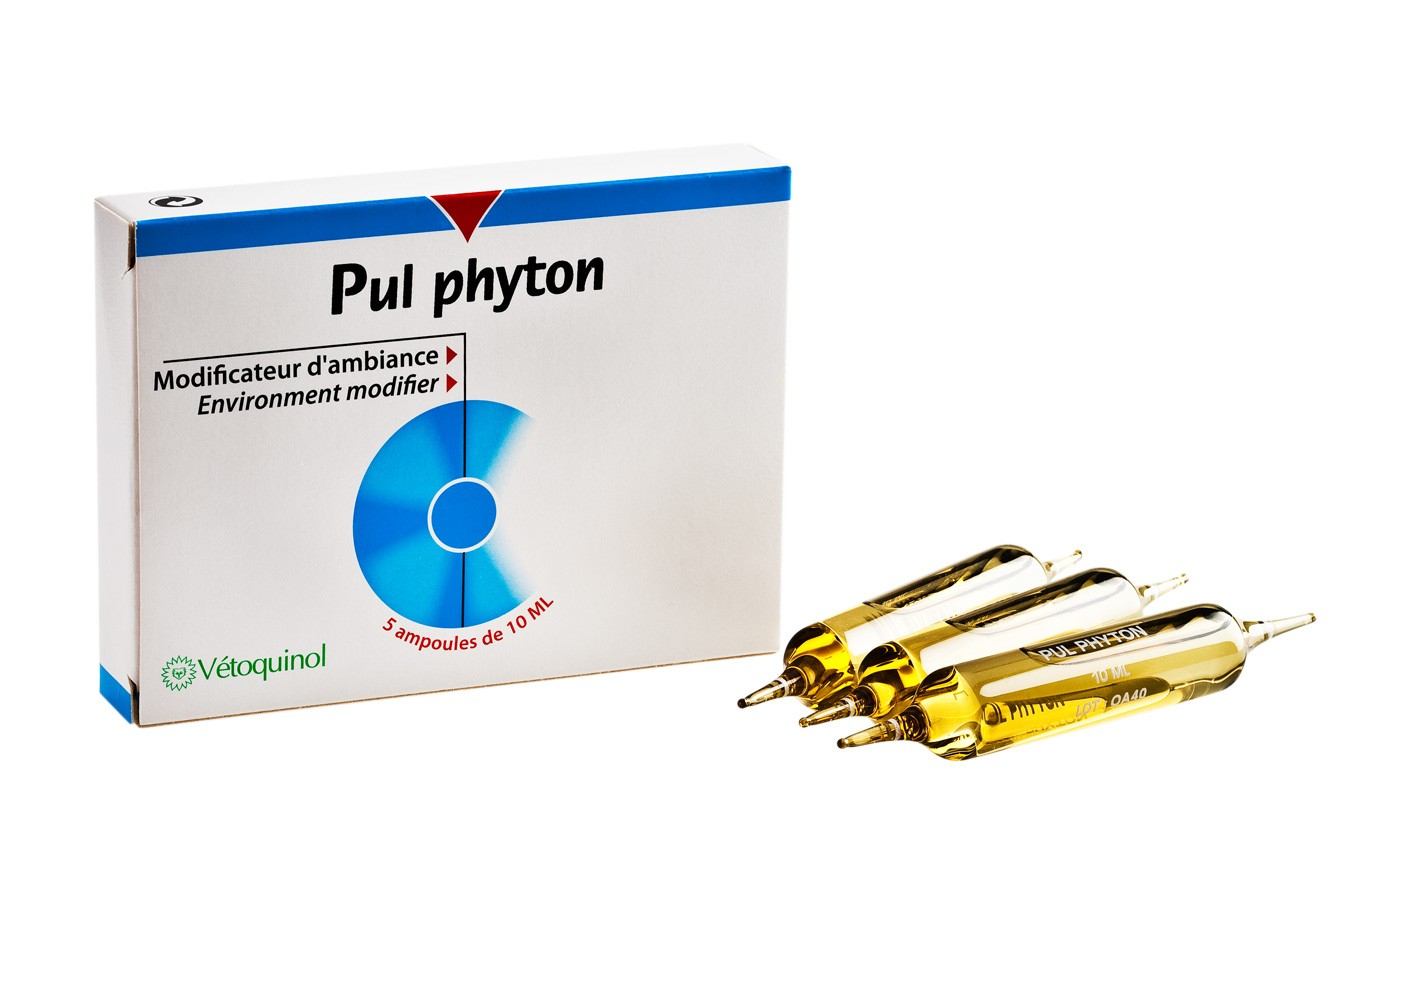 PUL PHYTON ademhalingsomgeving modificator